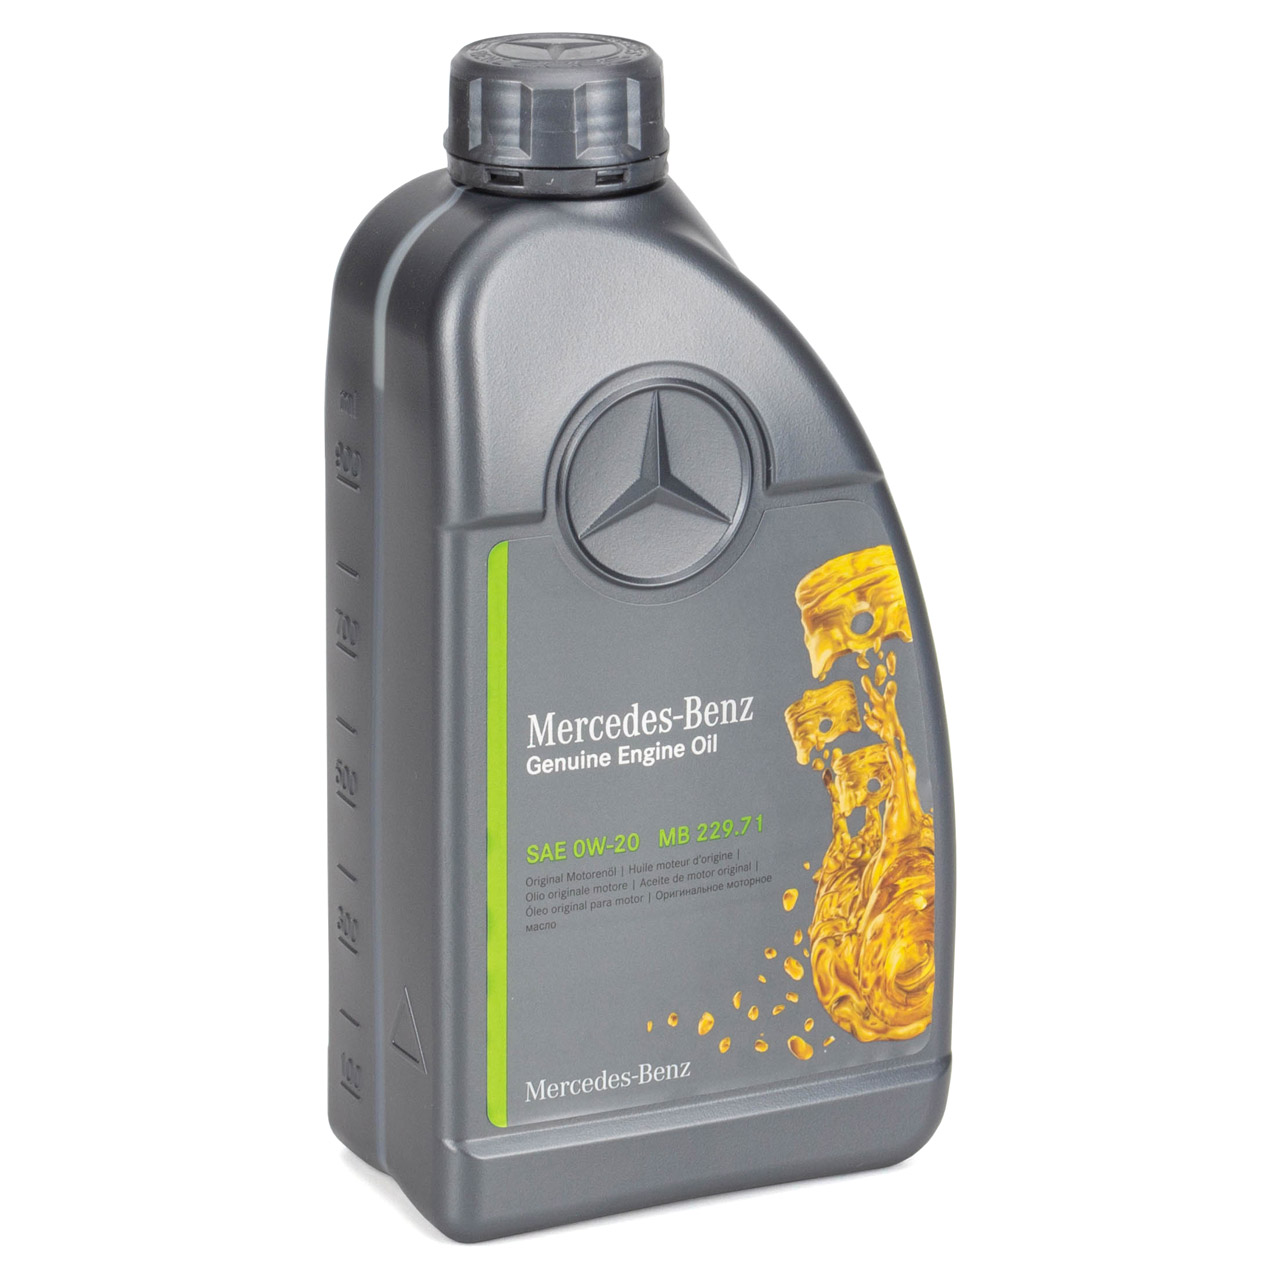 6L 6 Liter ORIGINAL Mercedes-Benz Motoröl Öl 0W-20 MB 229.71 000989870611